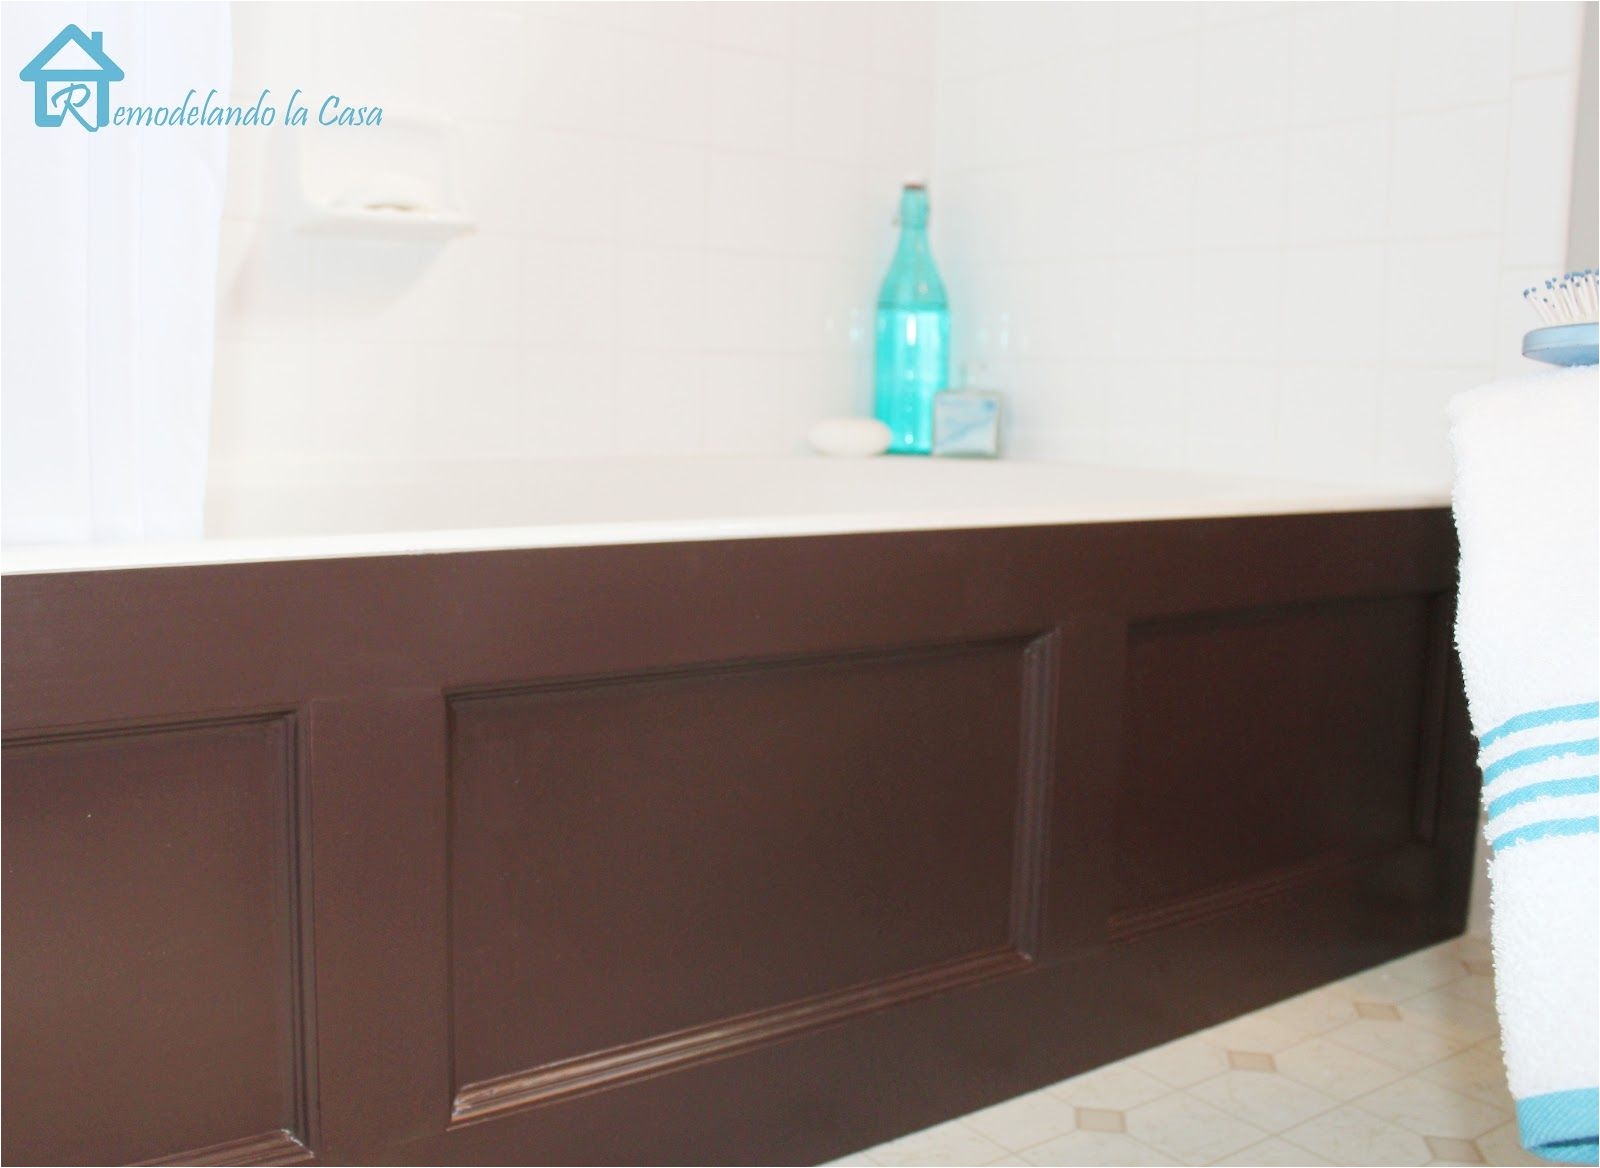 How to Make A Wooden Bathtub Bathtub Wood Panel Cover Home Pinterest Bathtubs Bathtub